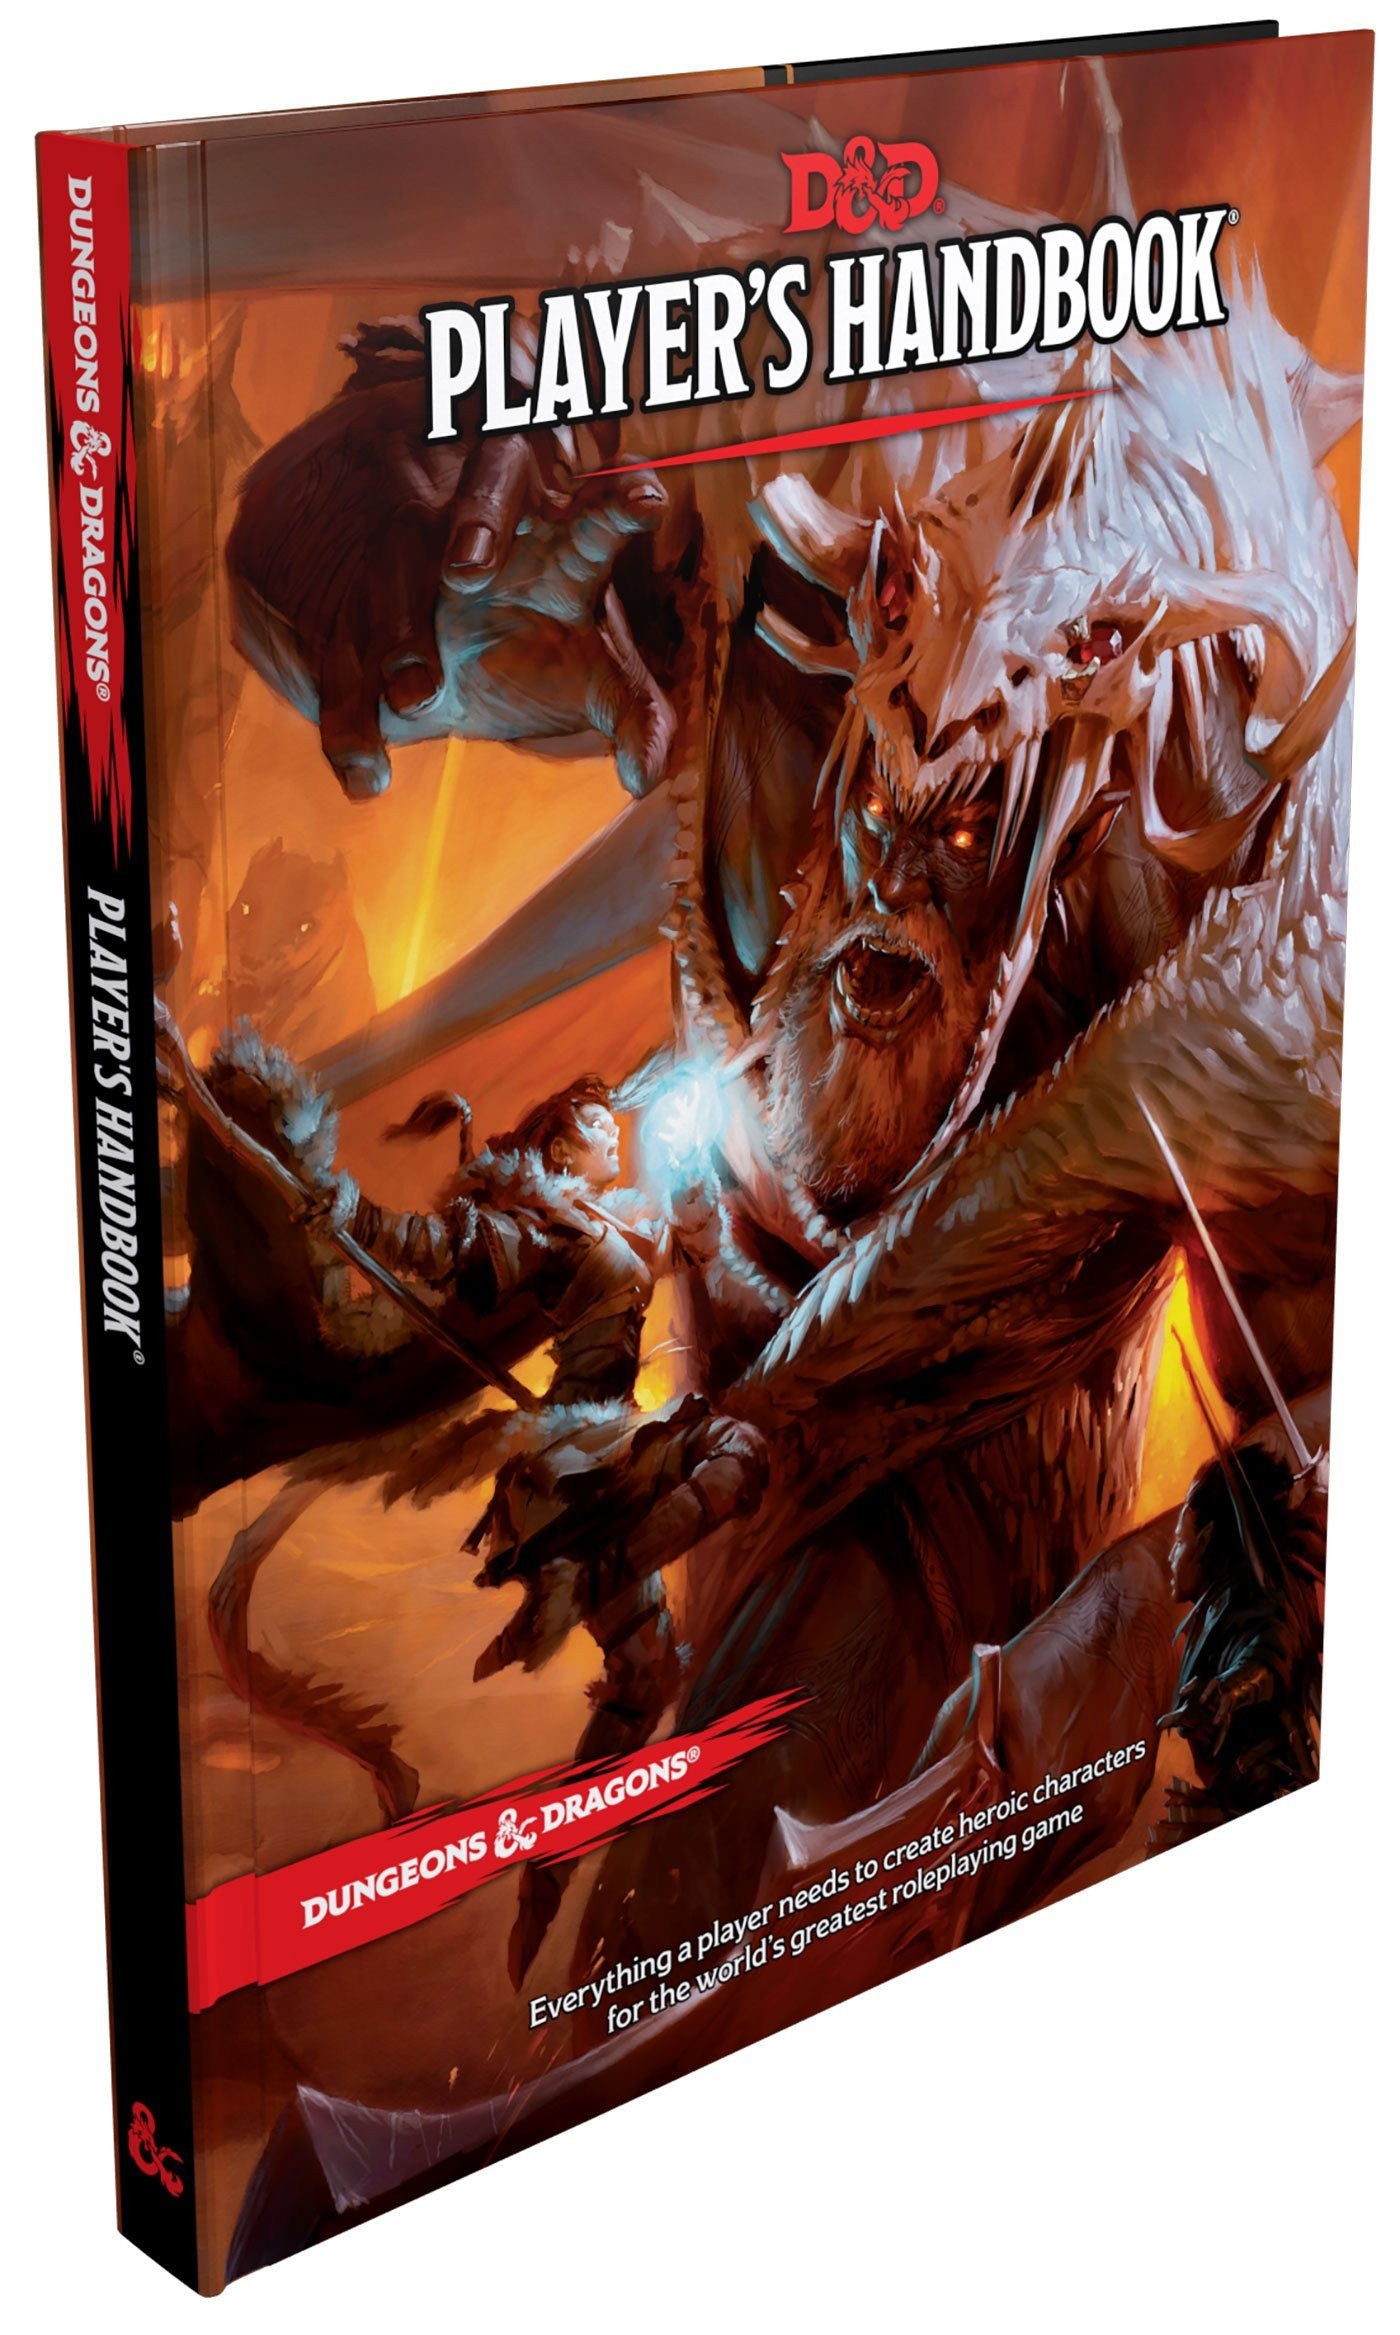 Köp Dungeons & Dragons 5th Edition Player's Handbook (D&D) Inkl. frakt